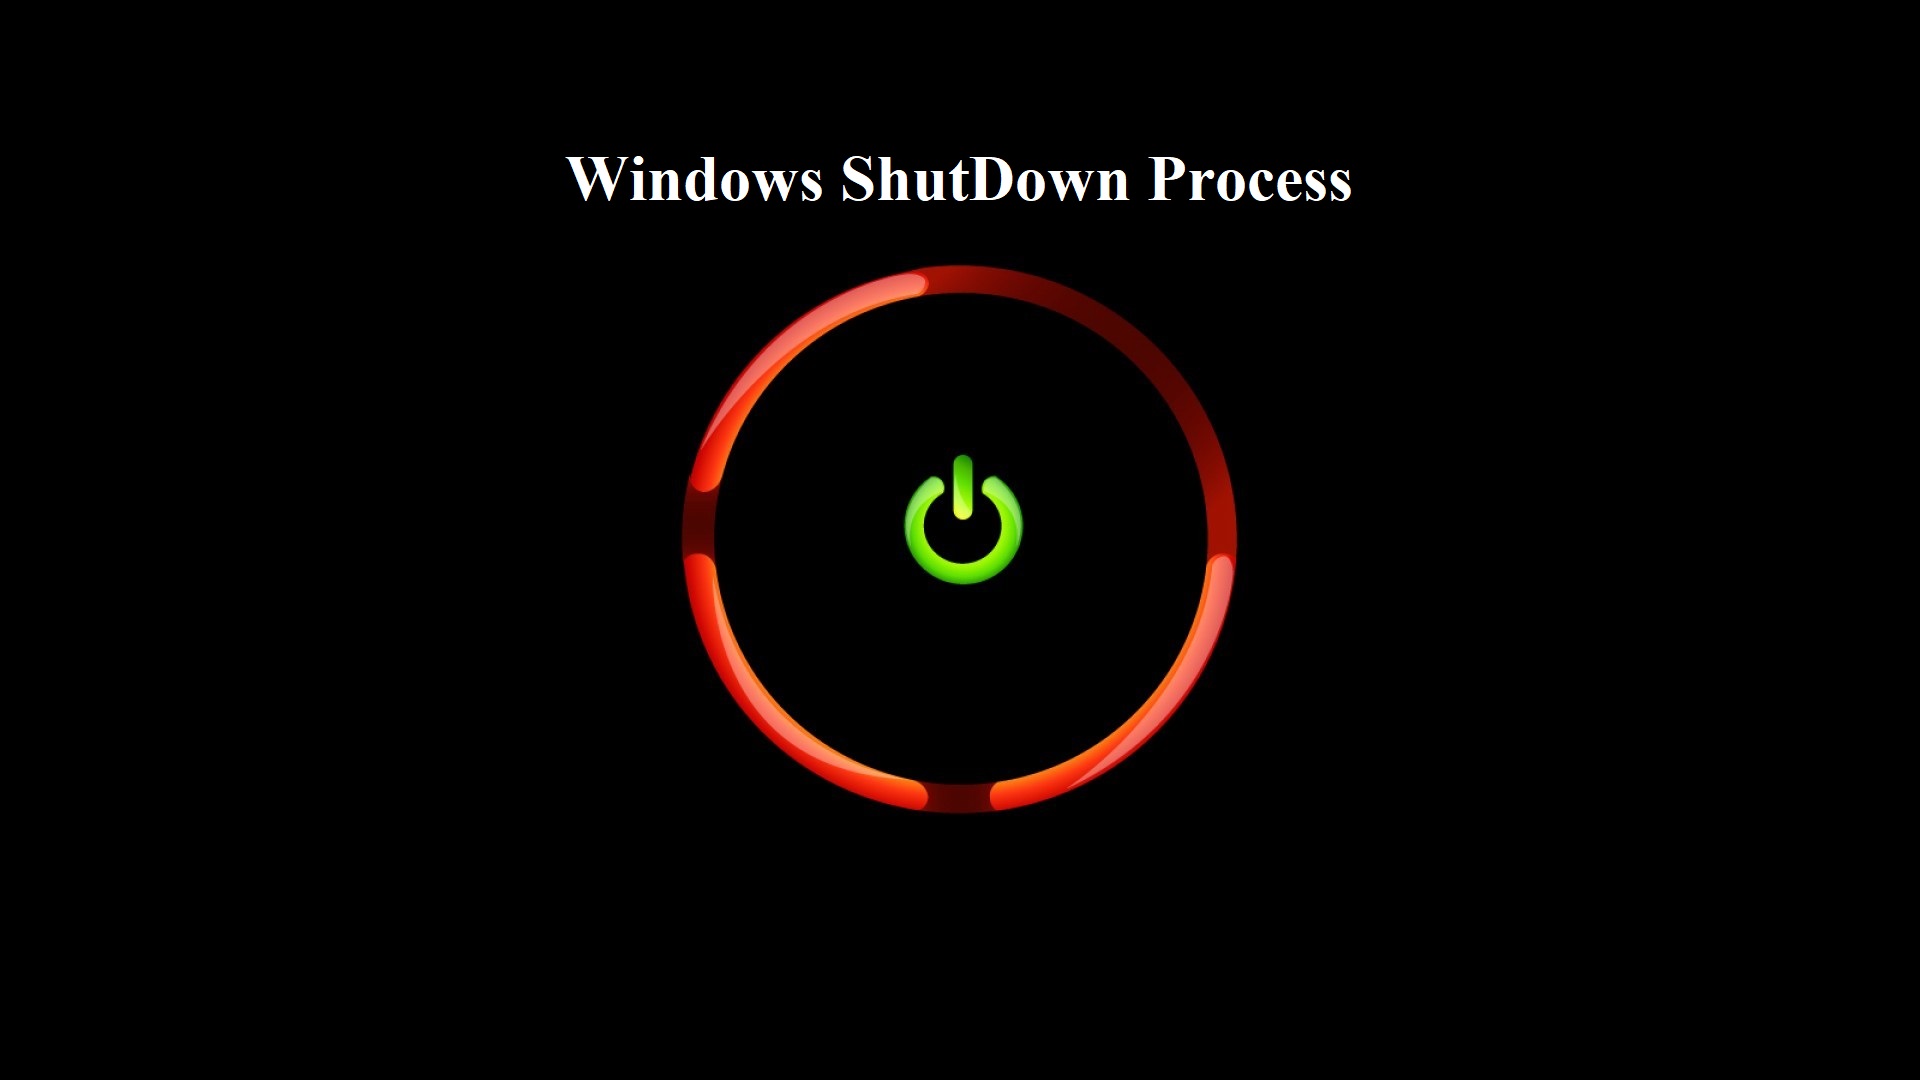 Windows shutdown process Behind the scean?